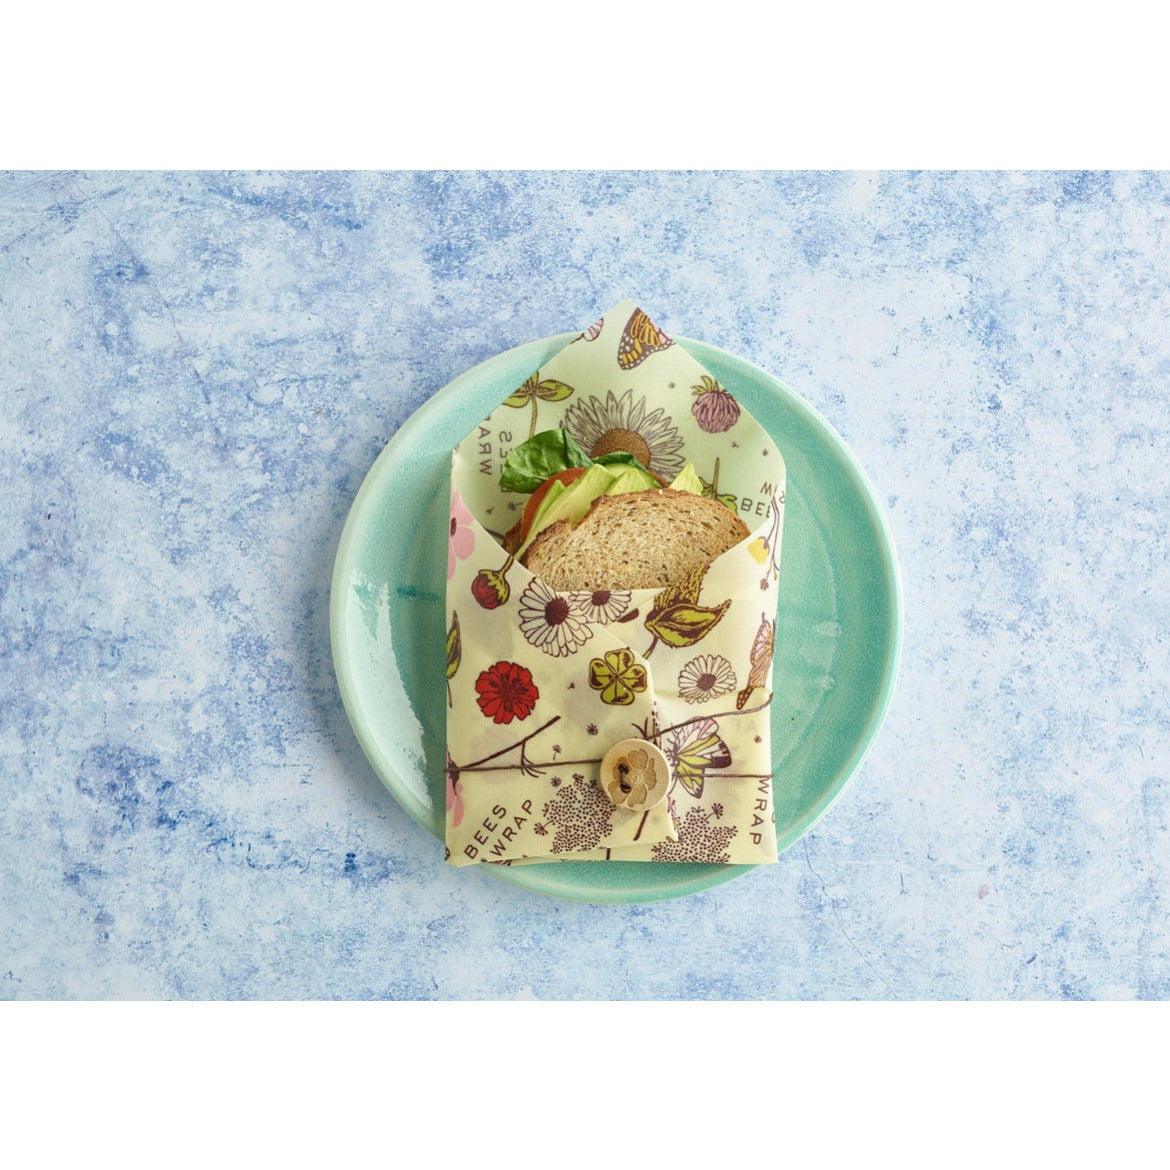 Vegan Food Wrap for Sandwiches - Ninth & Pine